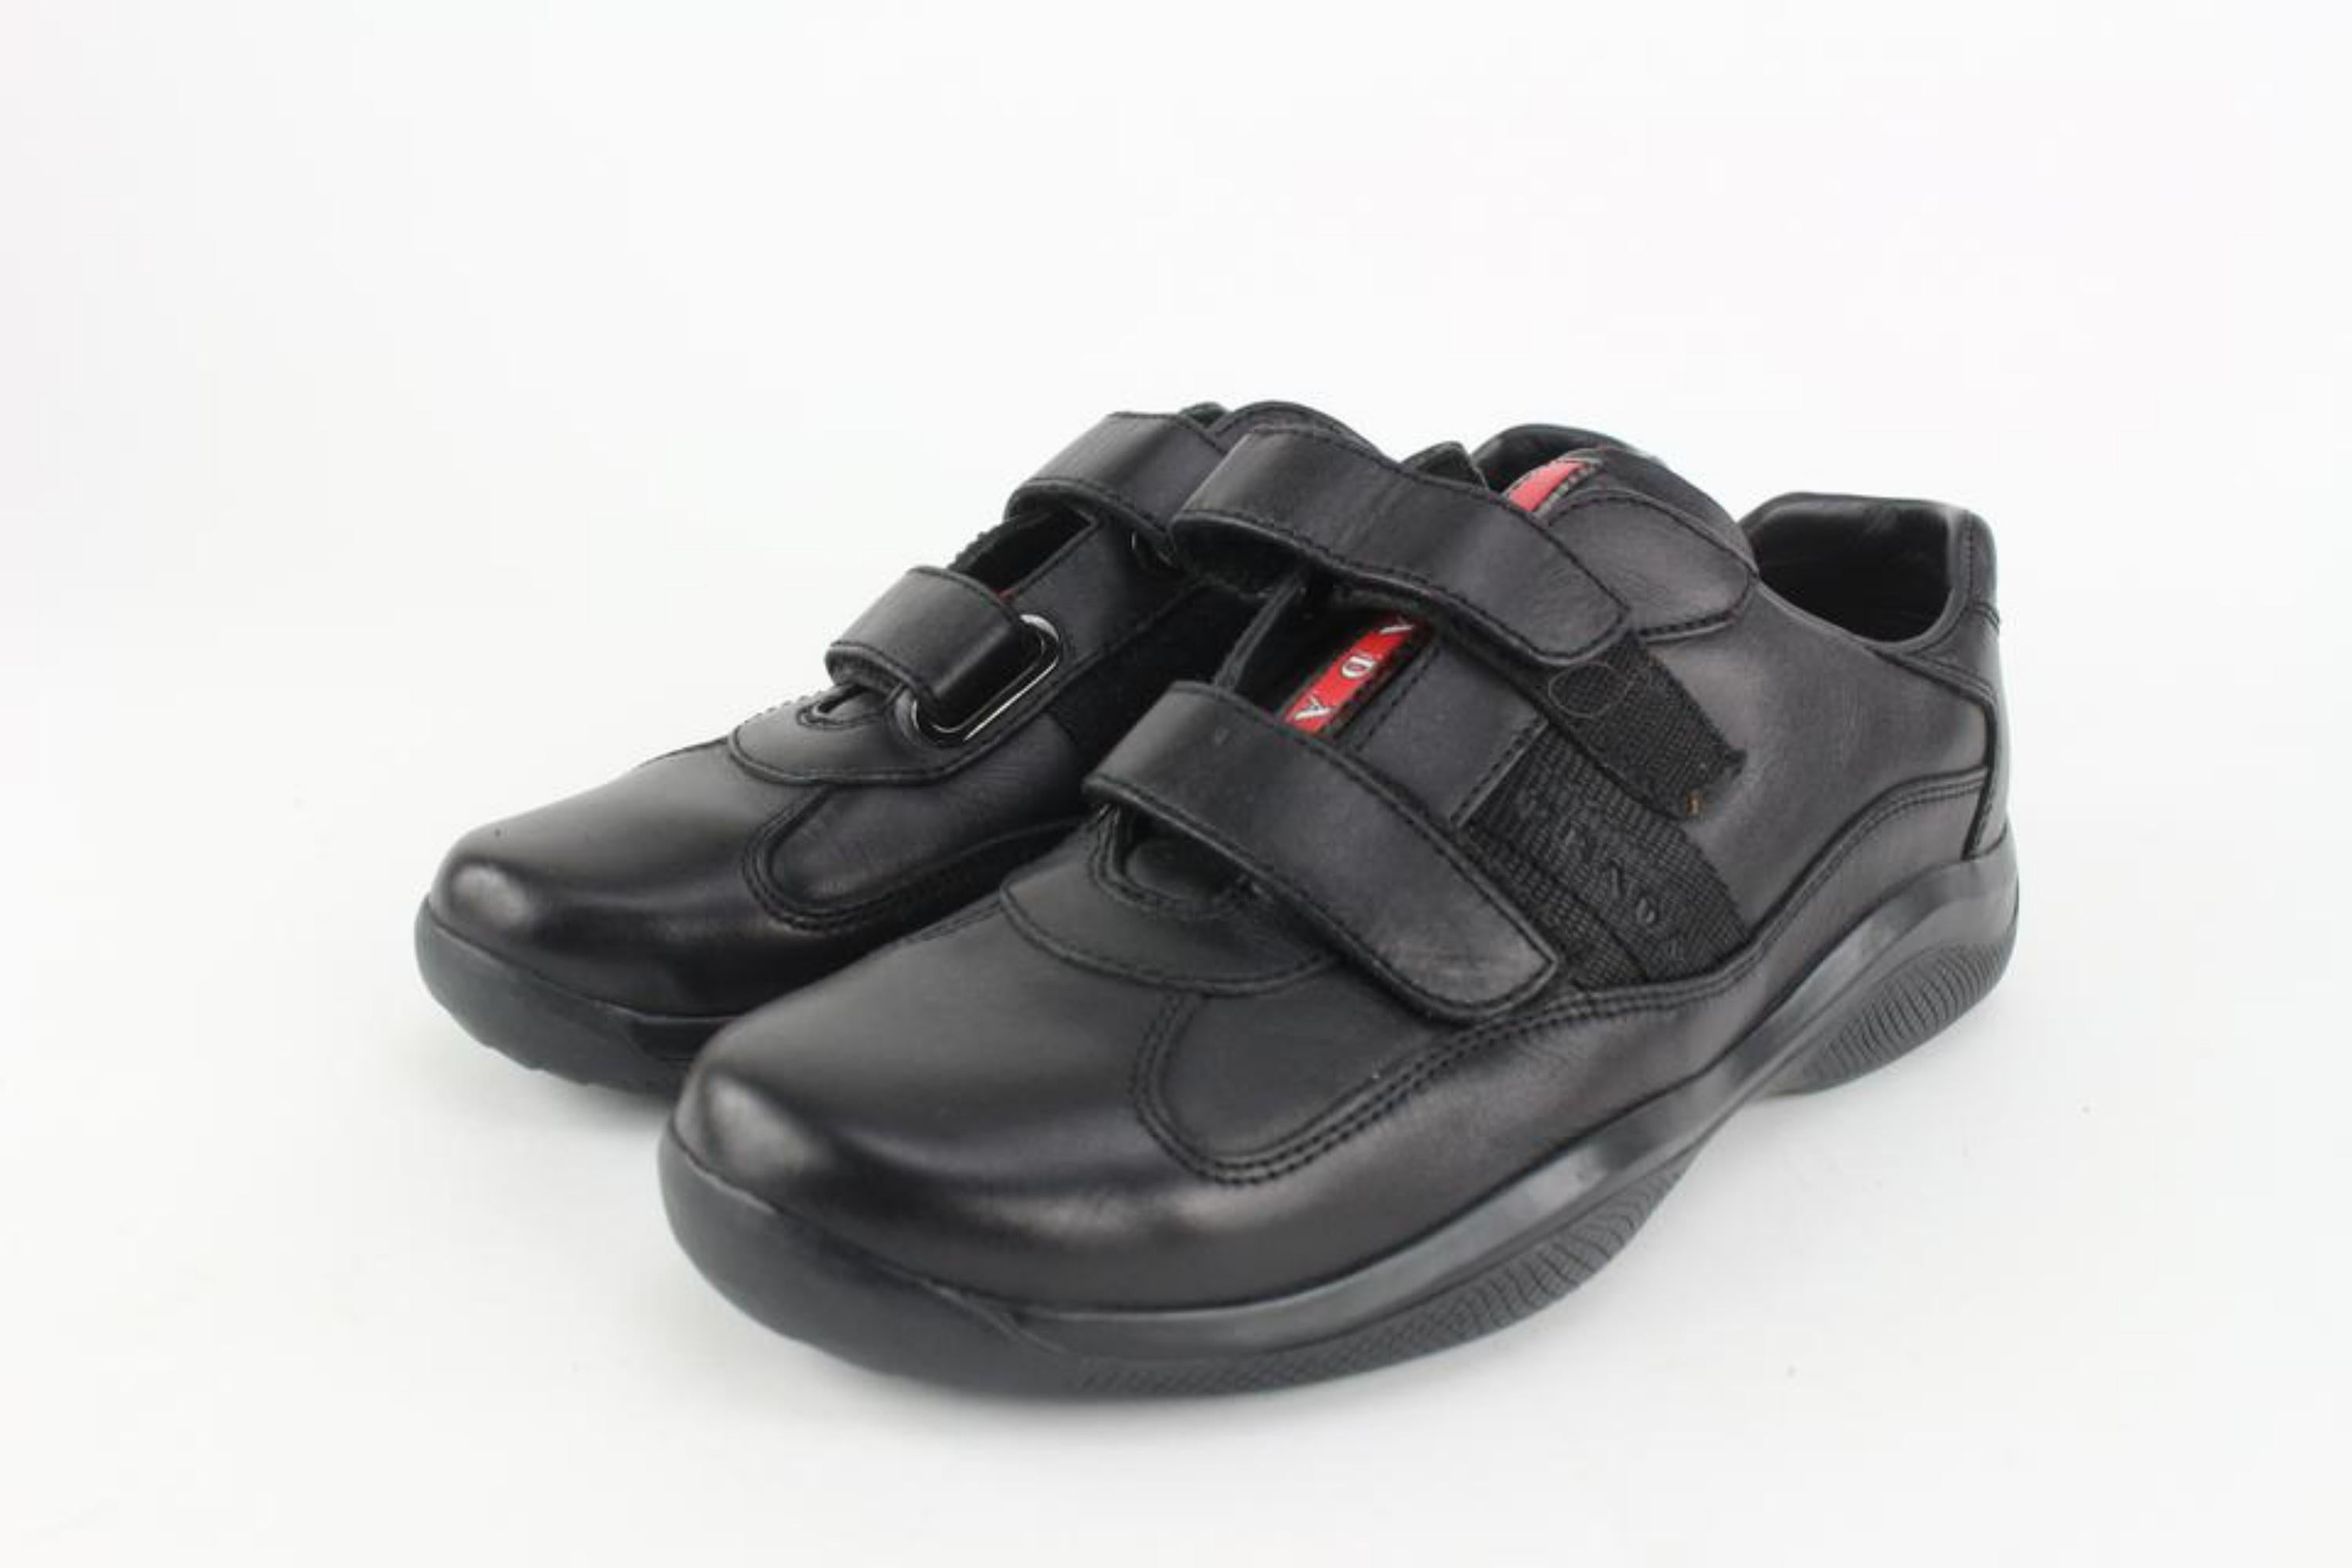 Prada Women's 7.5 US Black Velcro Low Top Sneaker 128p33
Date Code/Serial Number: 4P 1831
Made In: Vietnam
Measurements: Length:  11